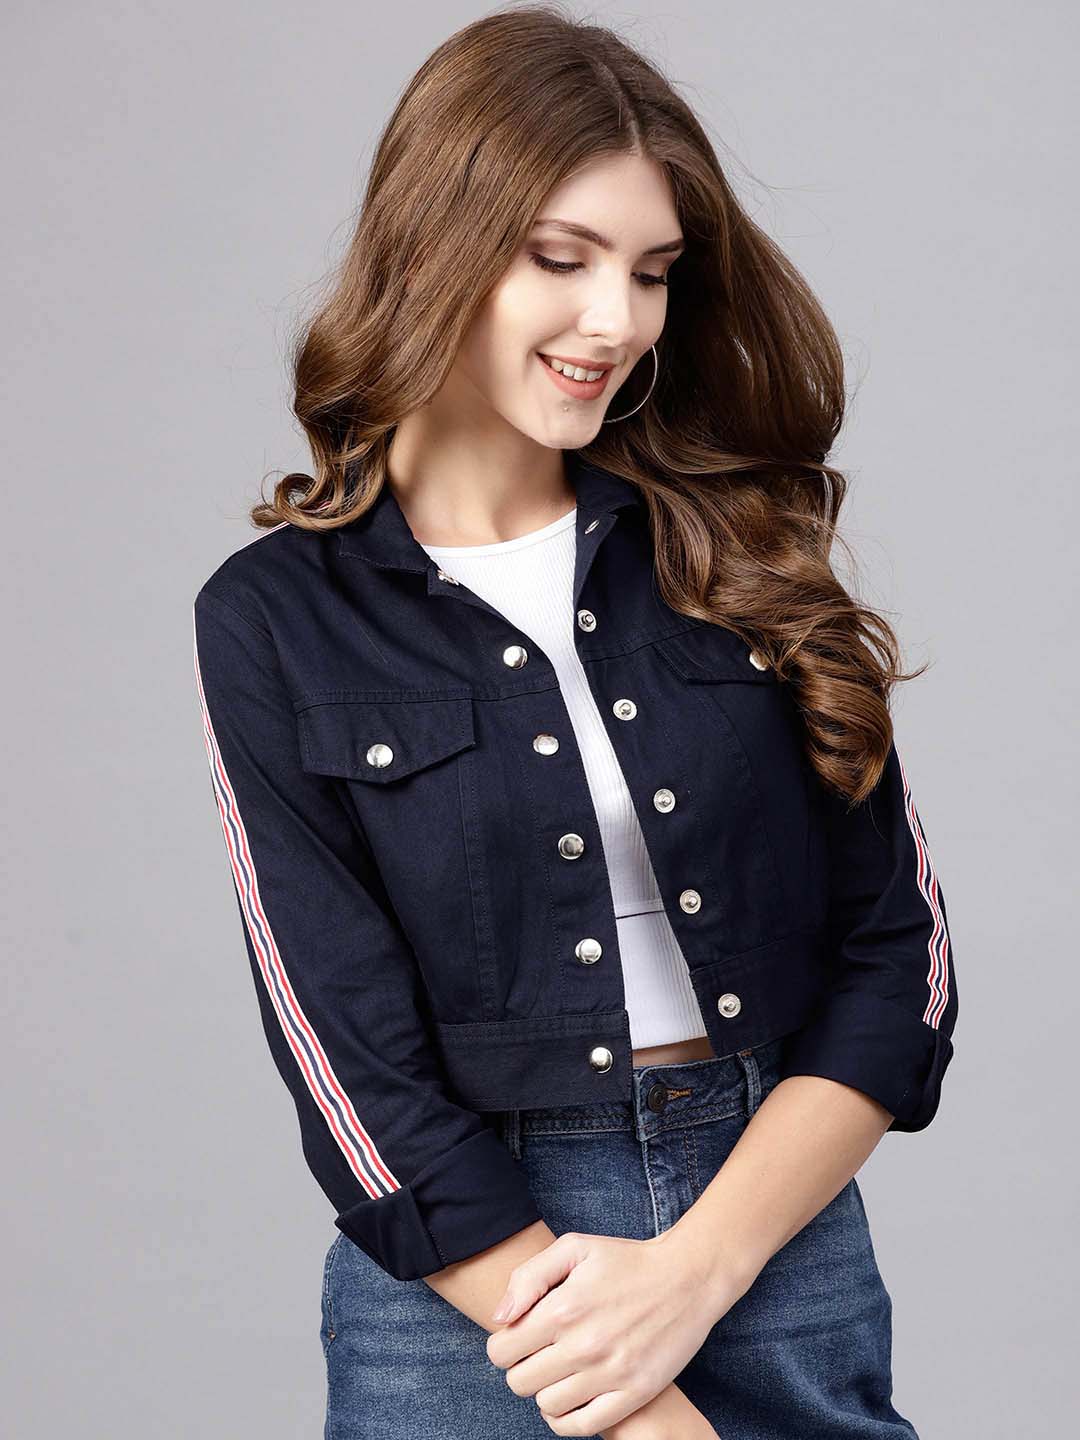 Highway Jeans Girls Black Crop Jacket Size Medium - beyond exchange